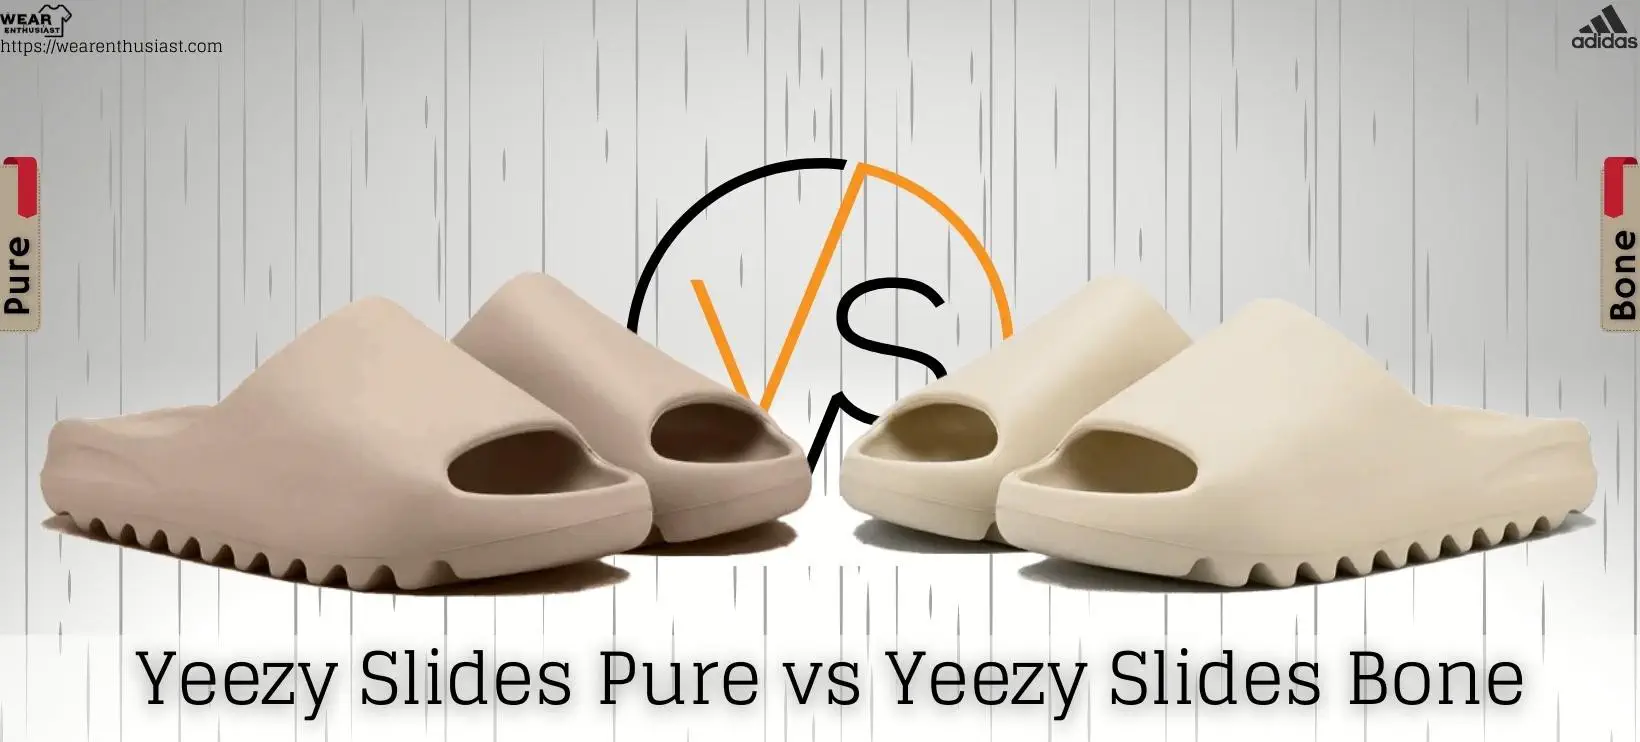 Yeezy Slides Pure vs Bone